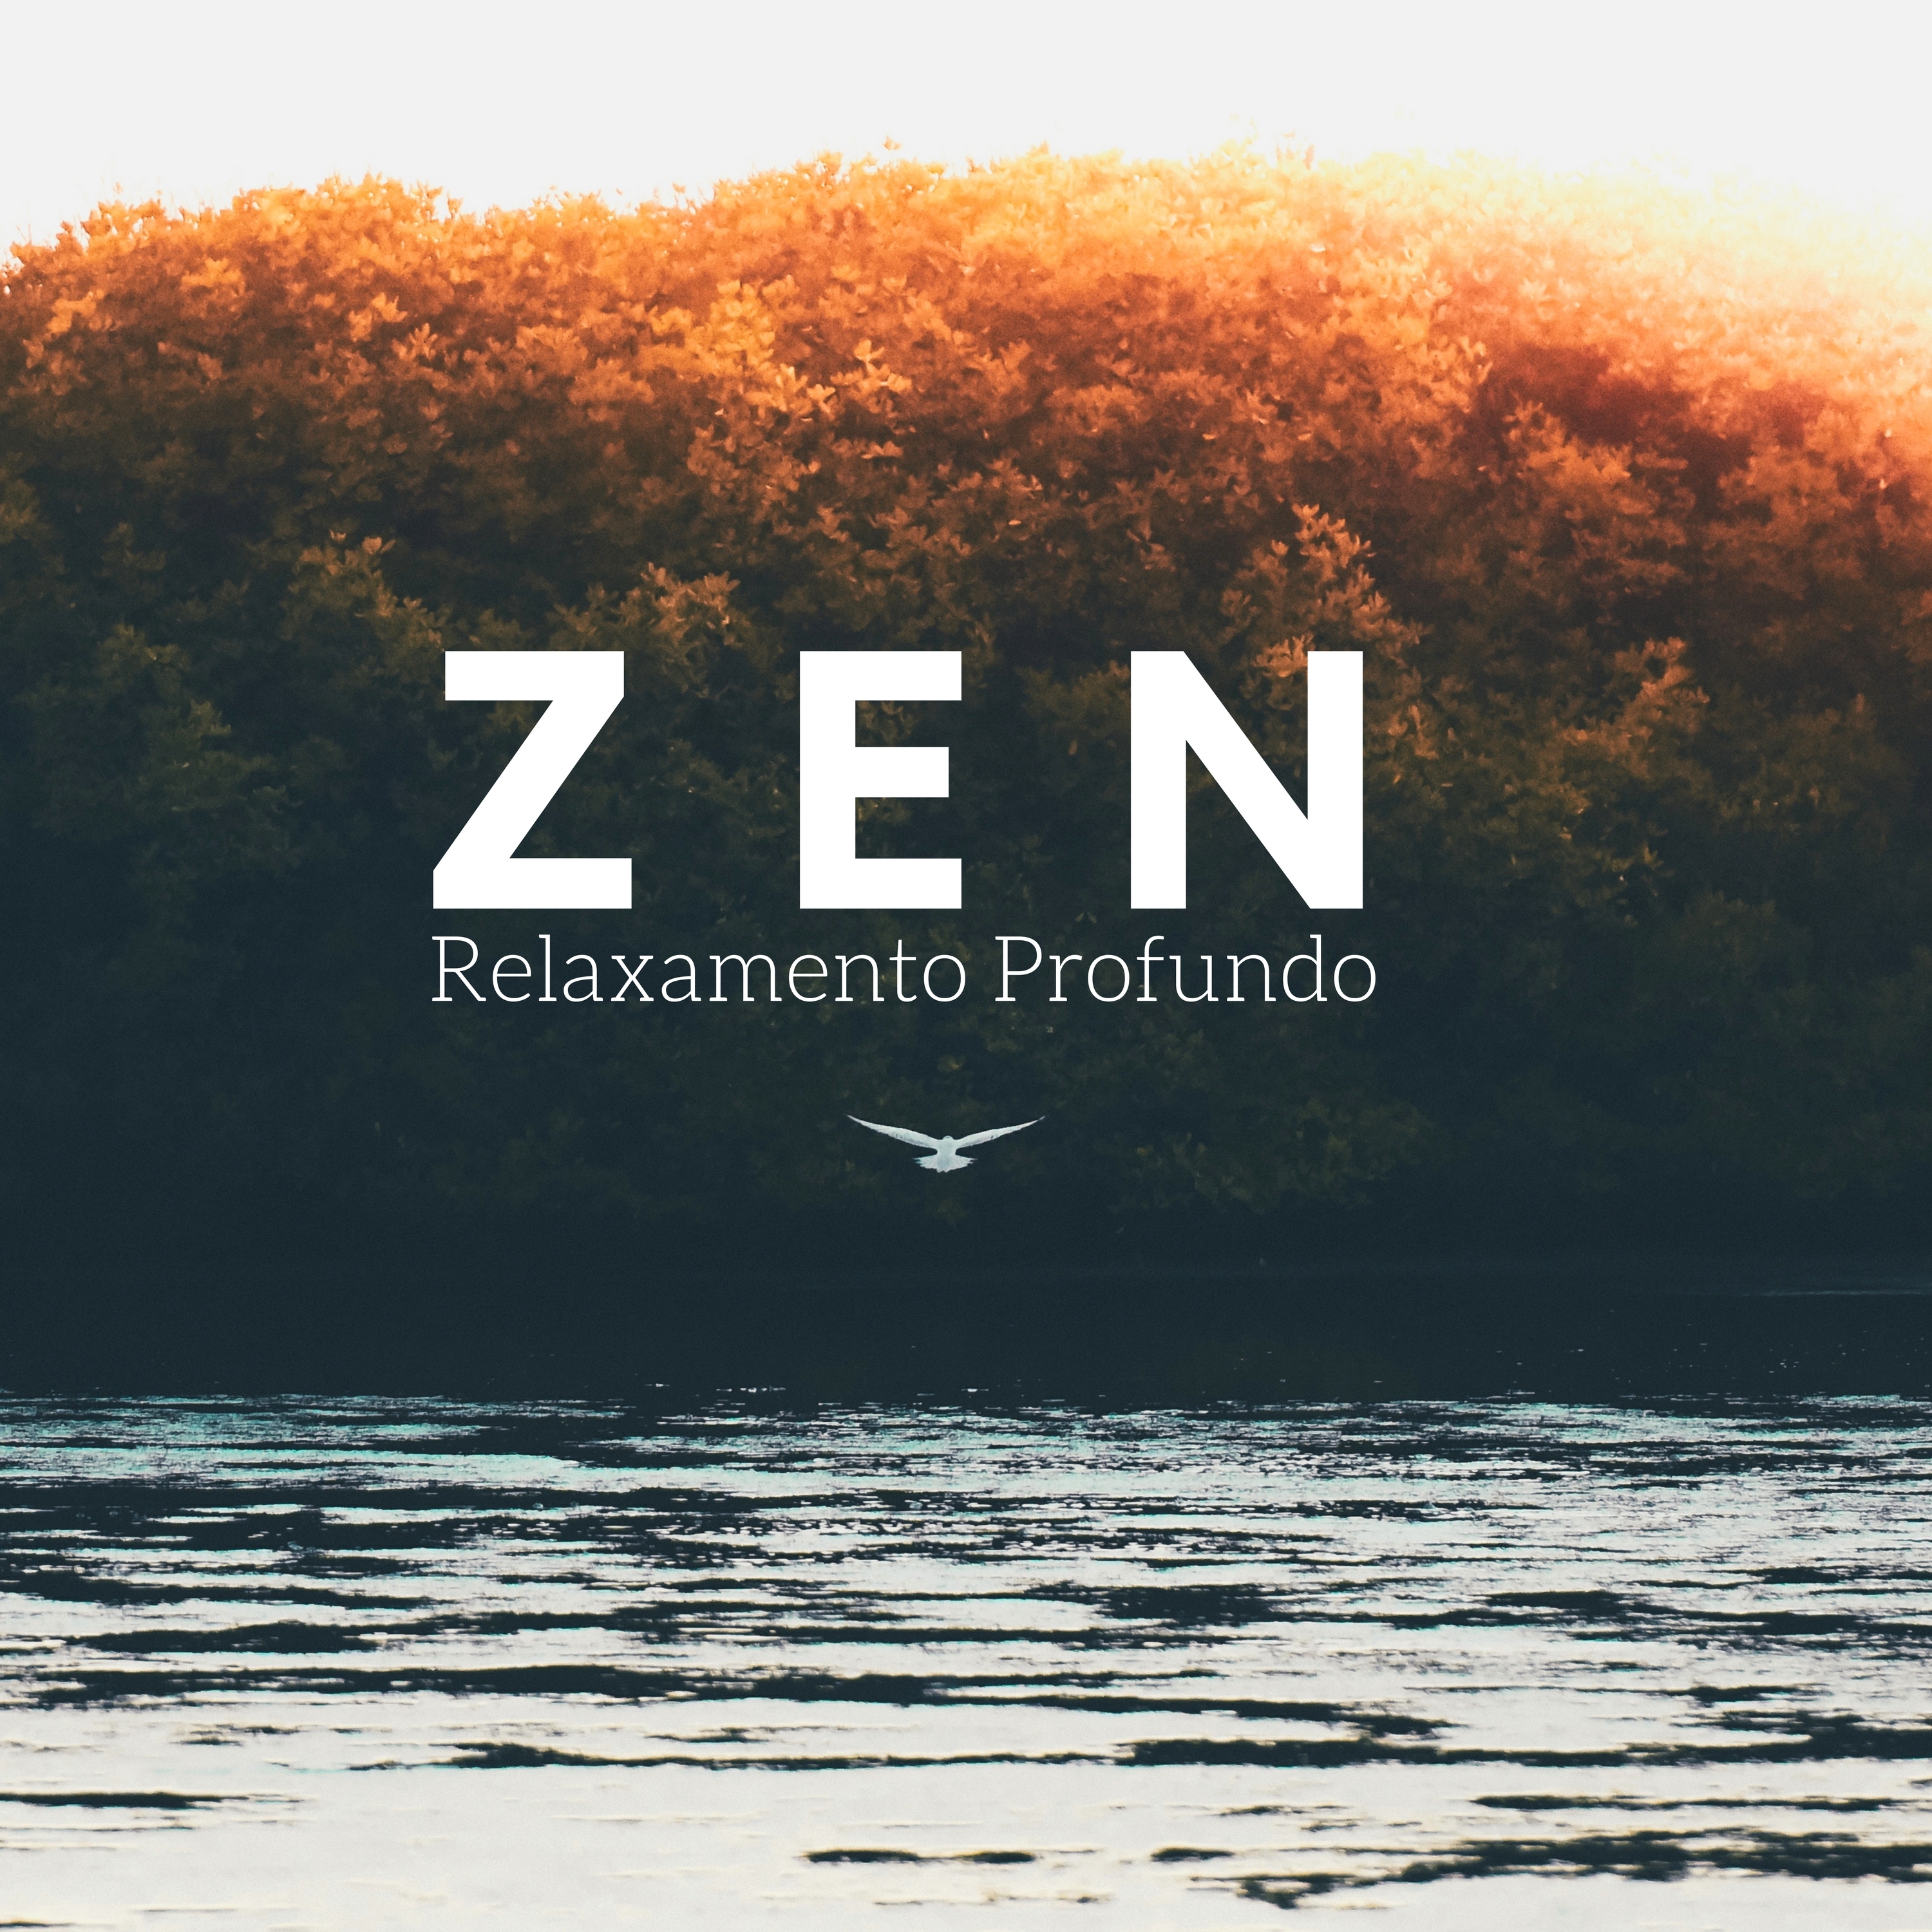 Zen  Relaxamento Profundo para Paz Interior, Estabilidade, Energia Positiva, Mu sica Ambiente, Sons da Natureza e Relaxamento para Dormir, Medita o, Yoga